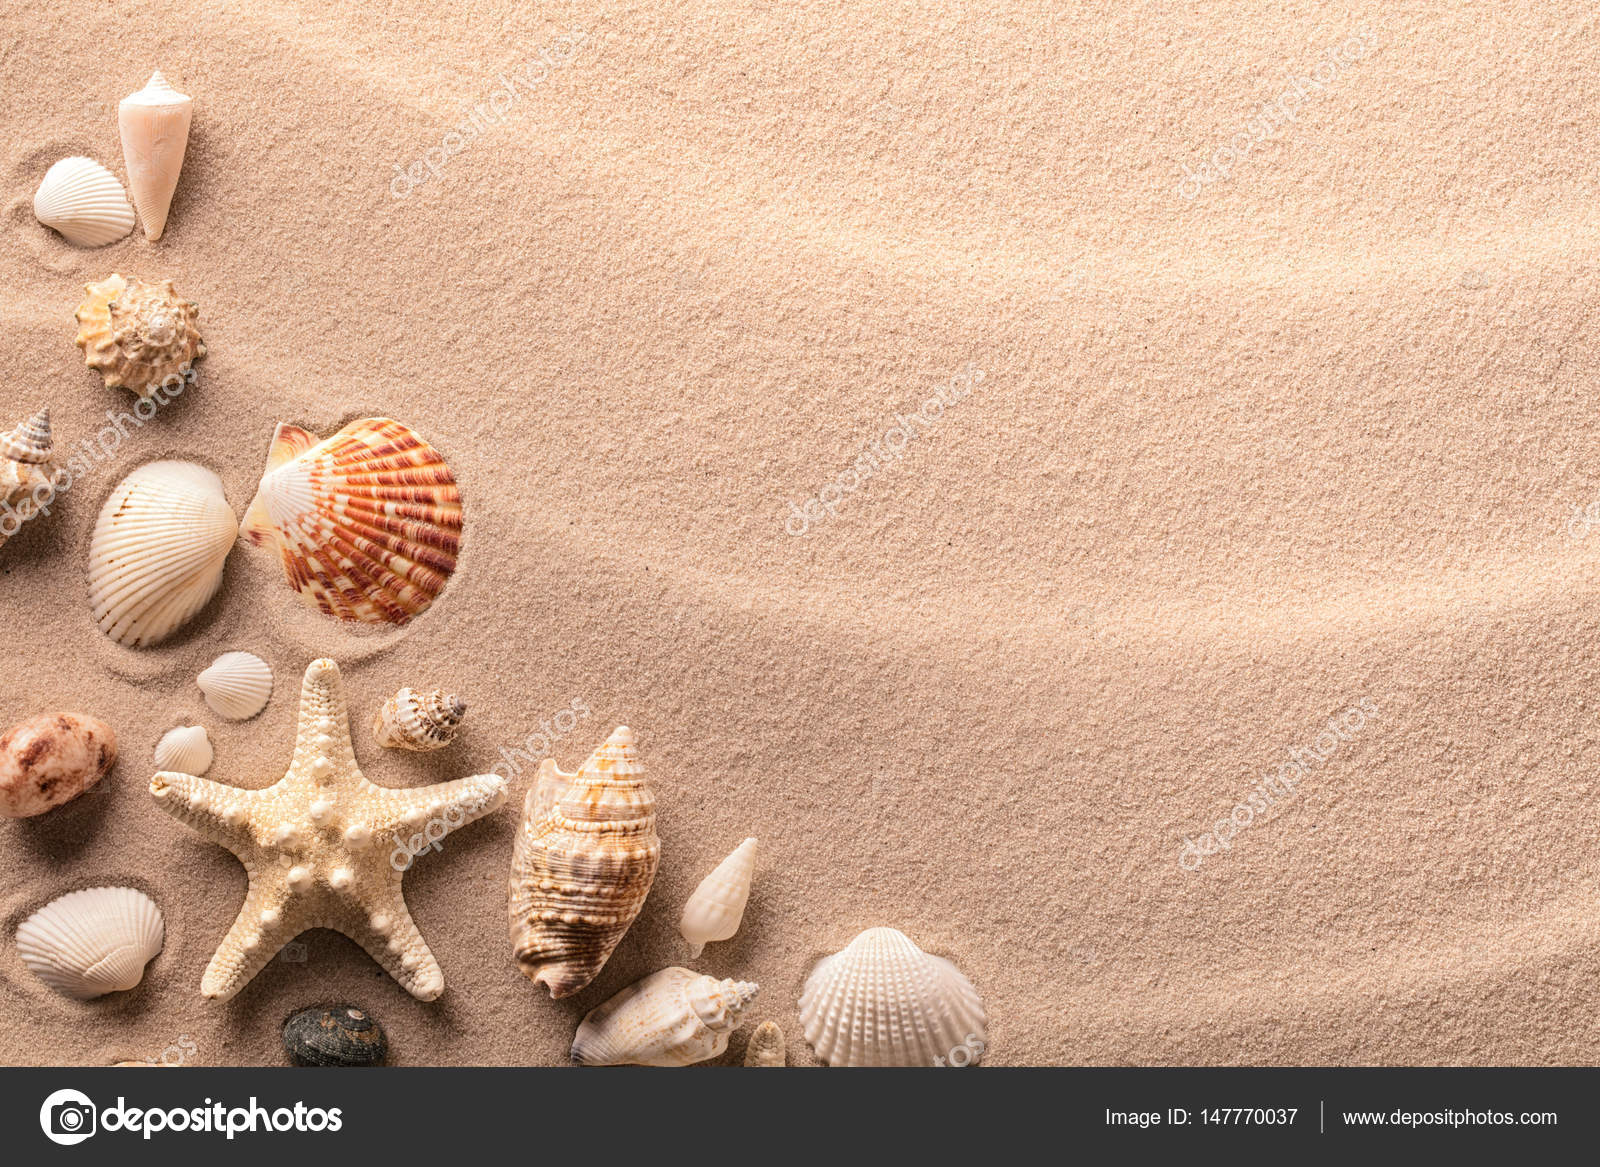 Beach Sand Shells Images – Browse 285,638 Stock Photos, Vectors